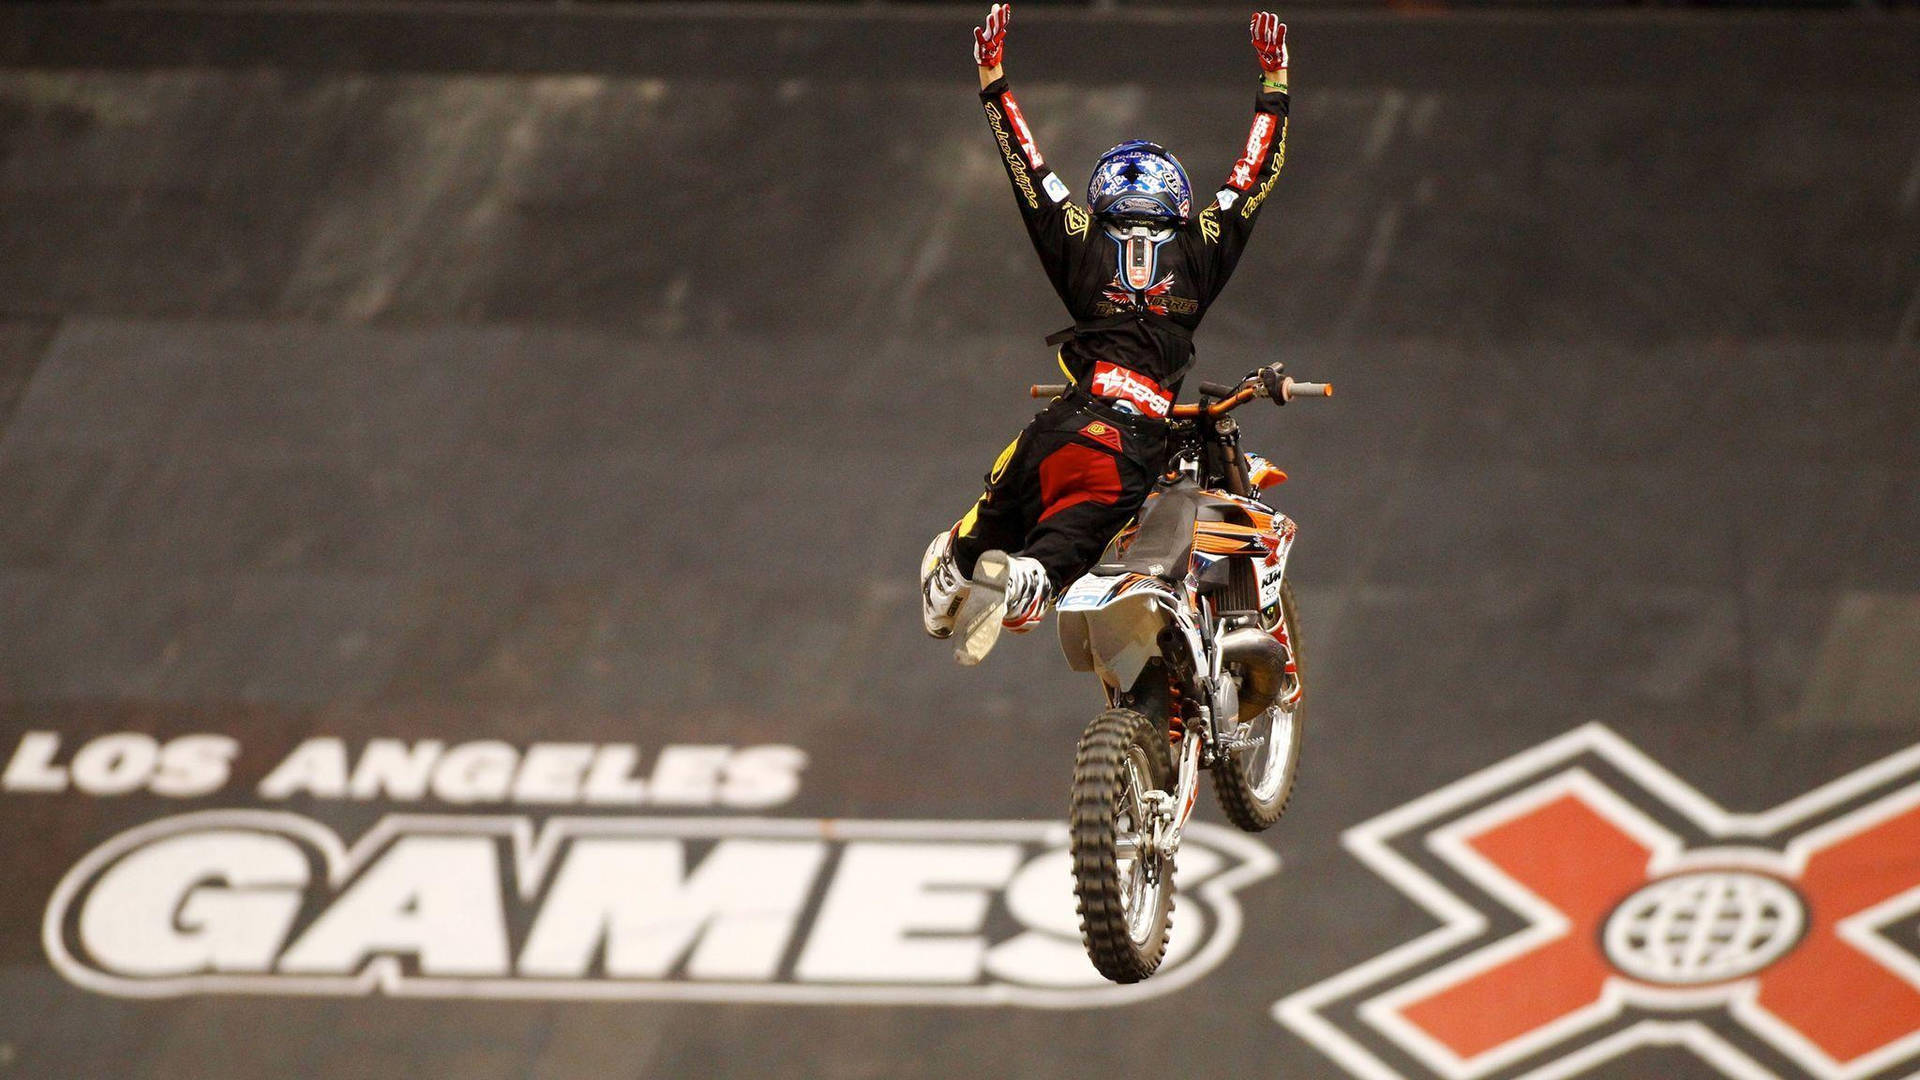 X Games Motocross No-hand Stunt Background